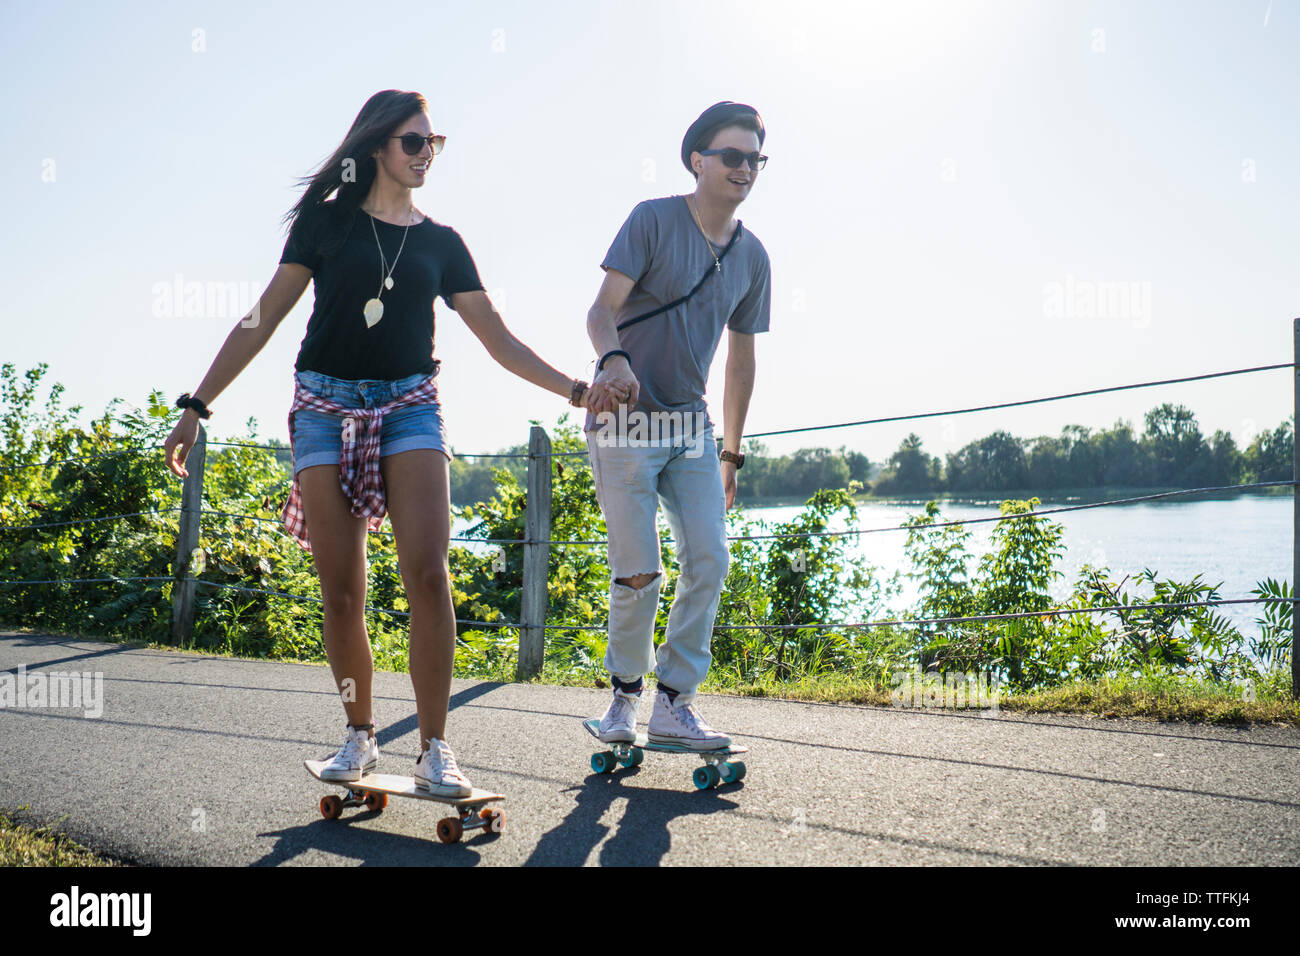 Couple cruising down bike path together on skateboard cruiser boards Stock Photo